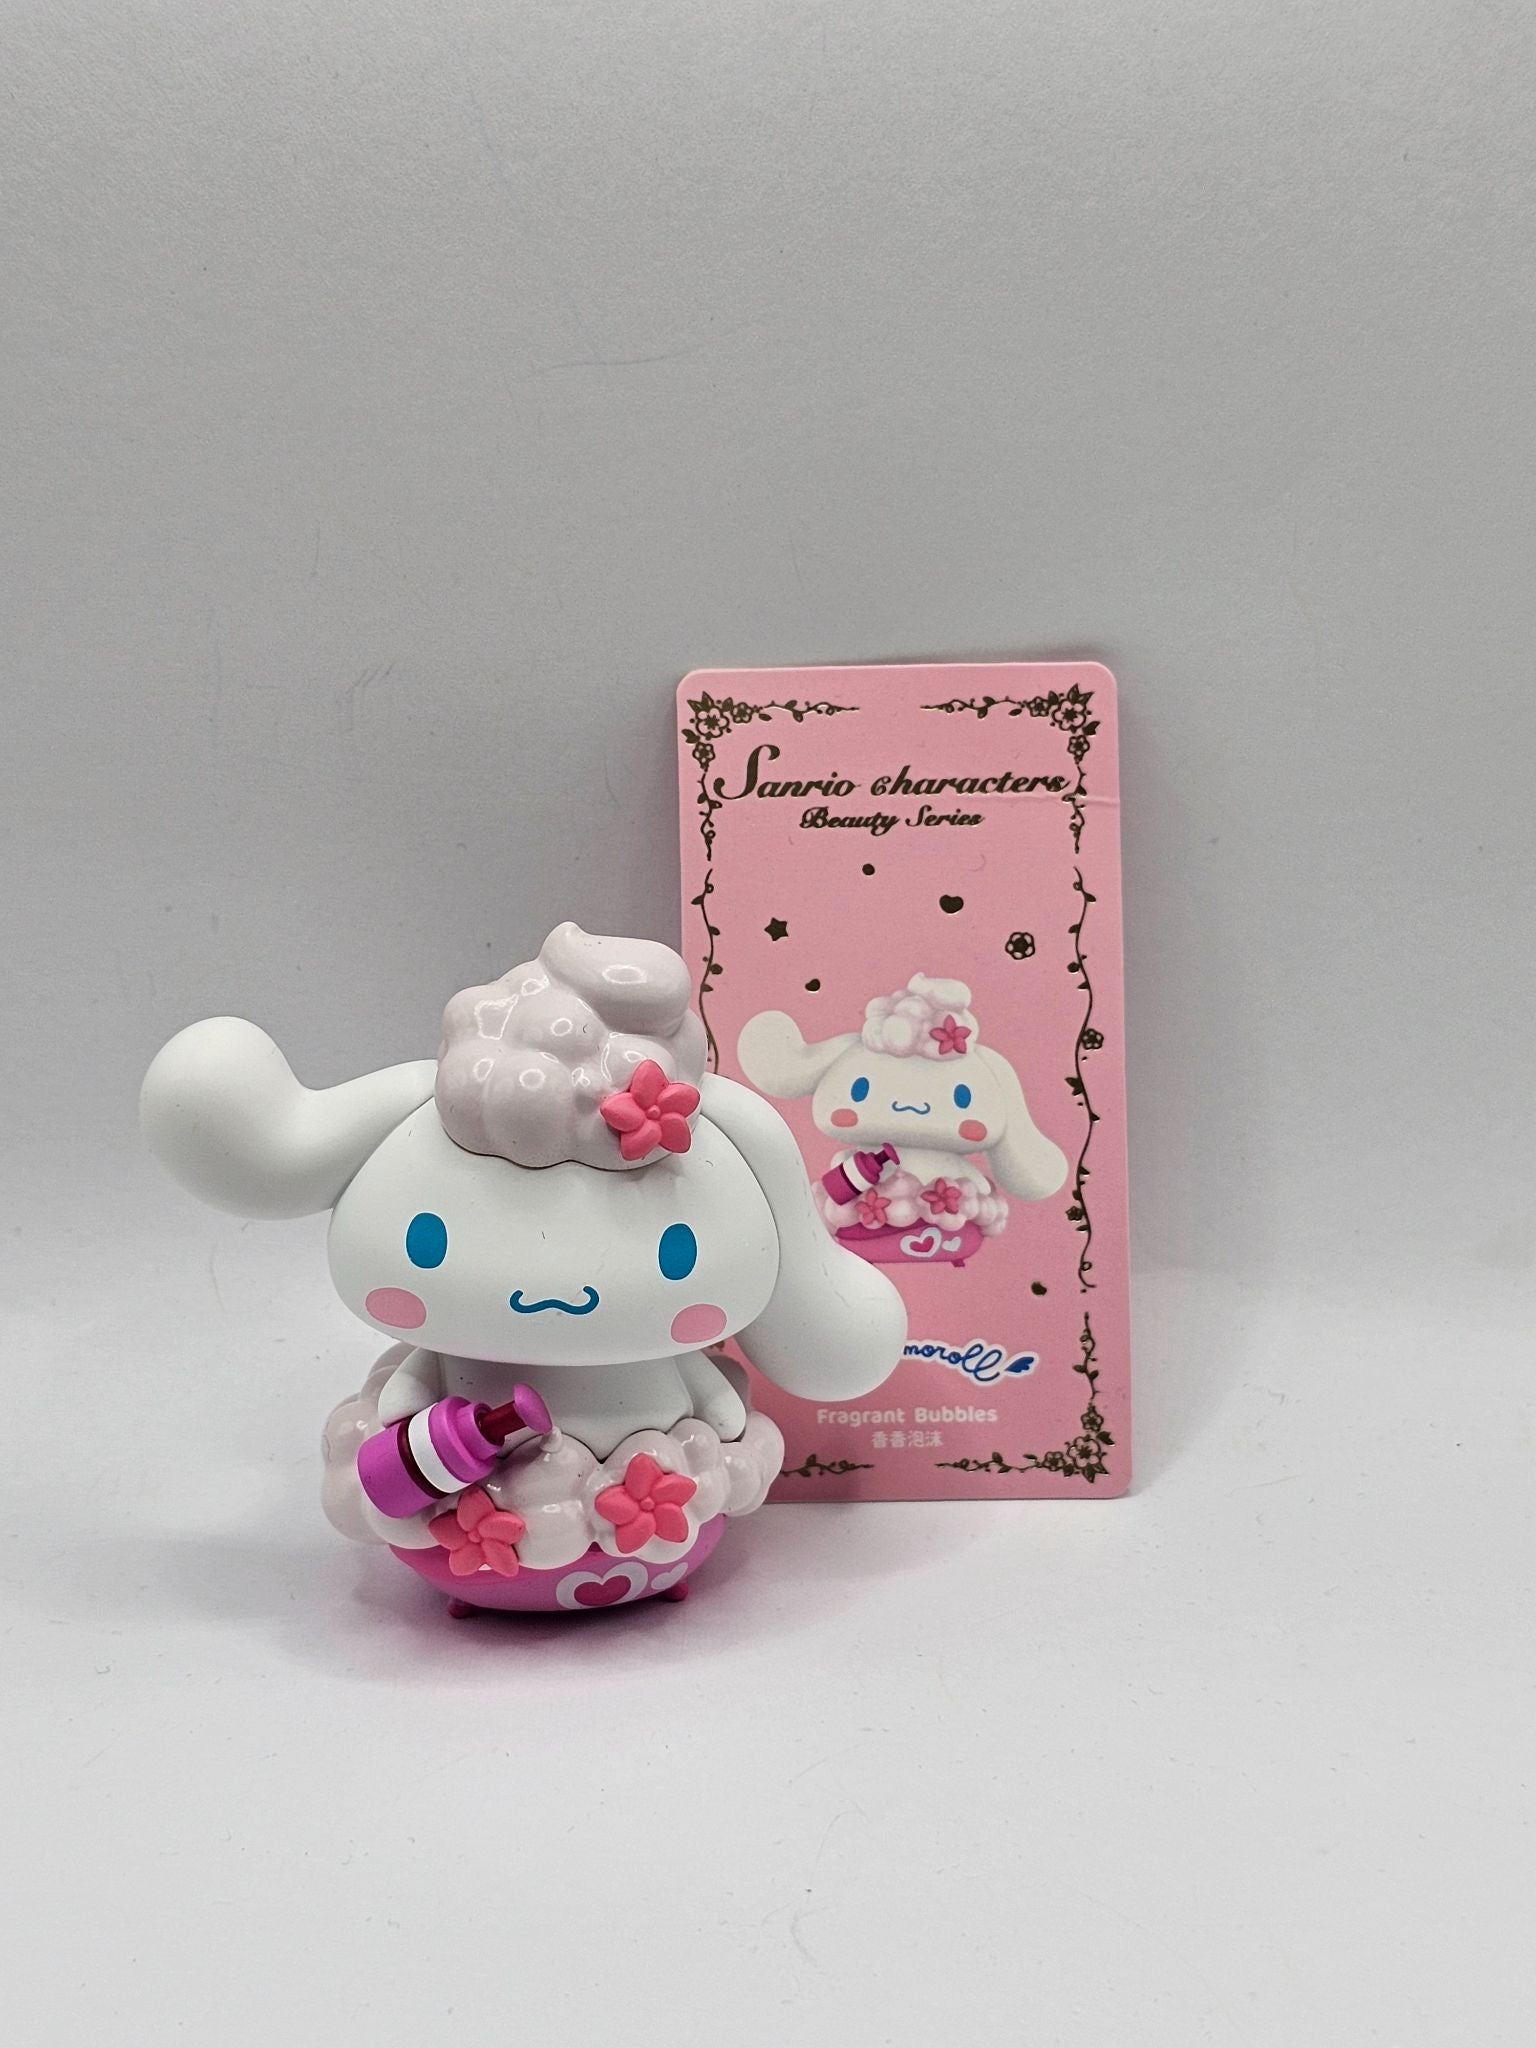 Fragrant Bubbles Cinnamoroll - Sanrio Characters Beauty Series - 1